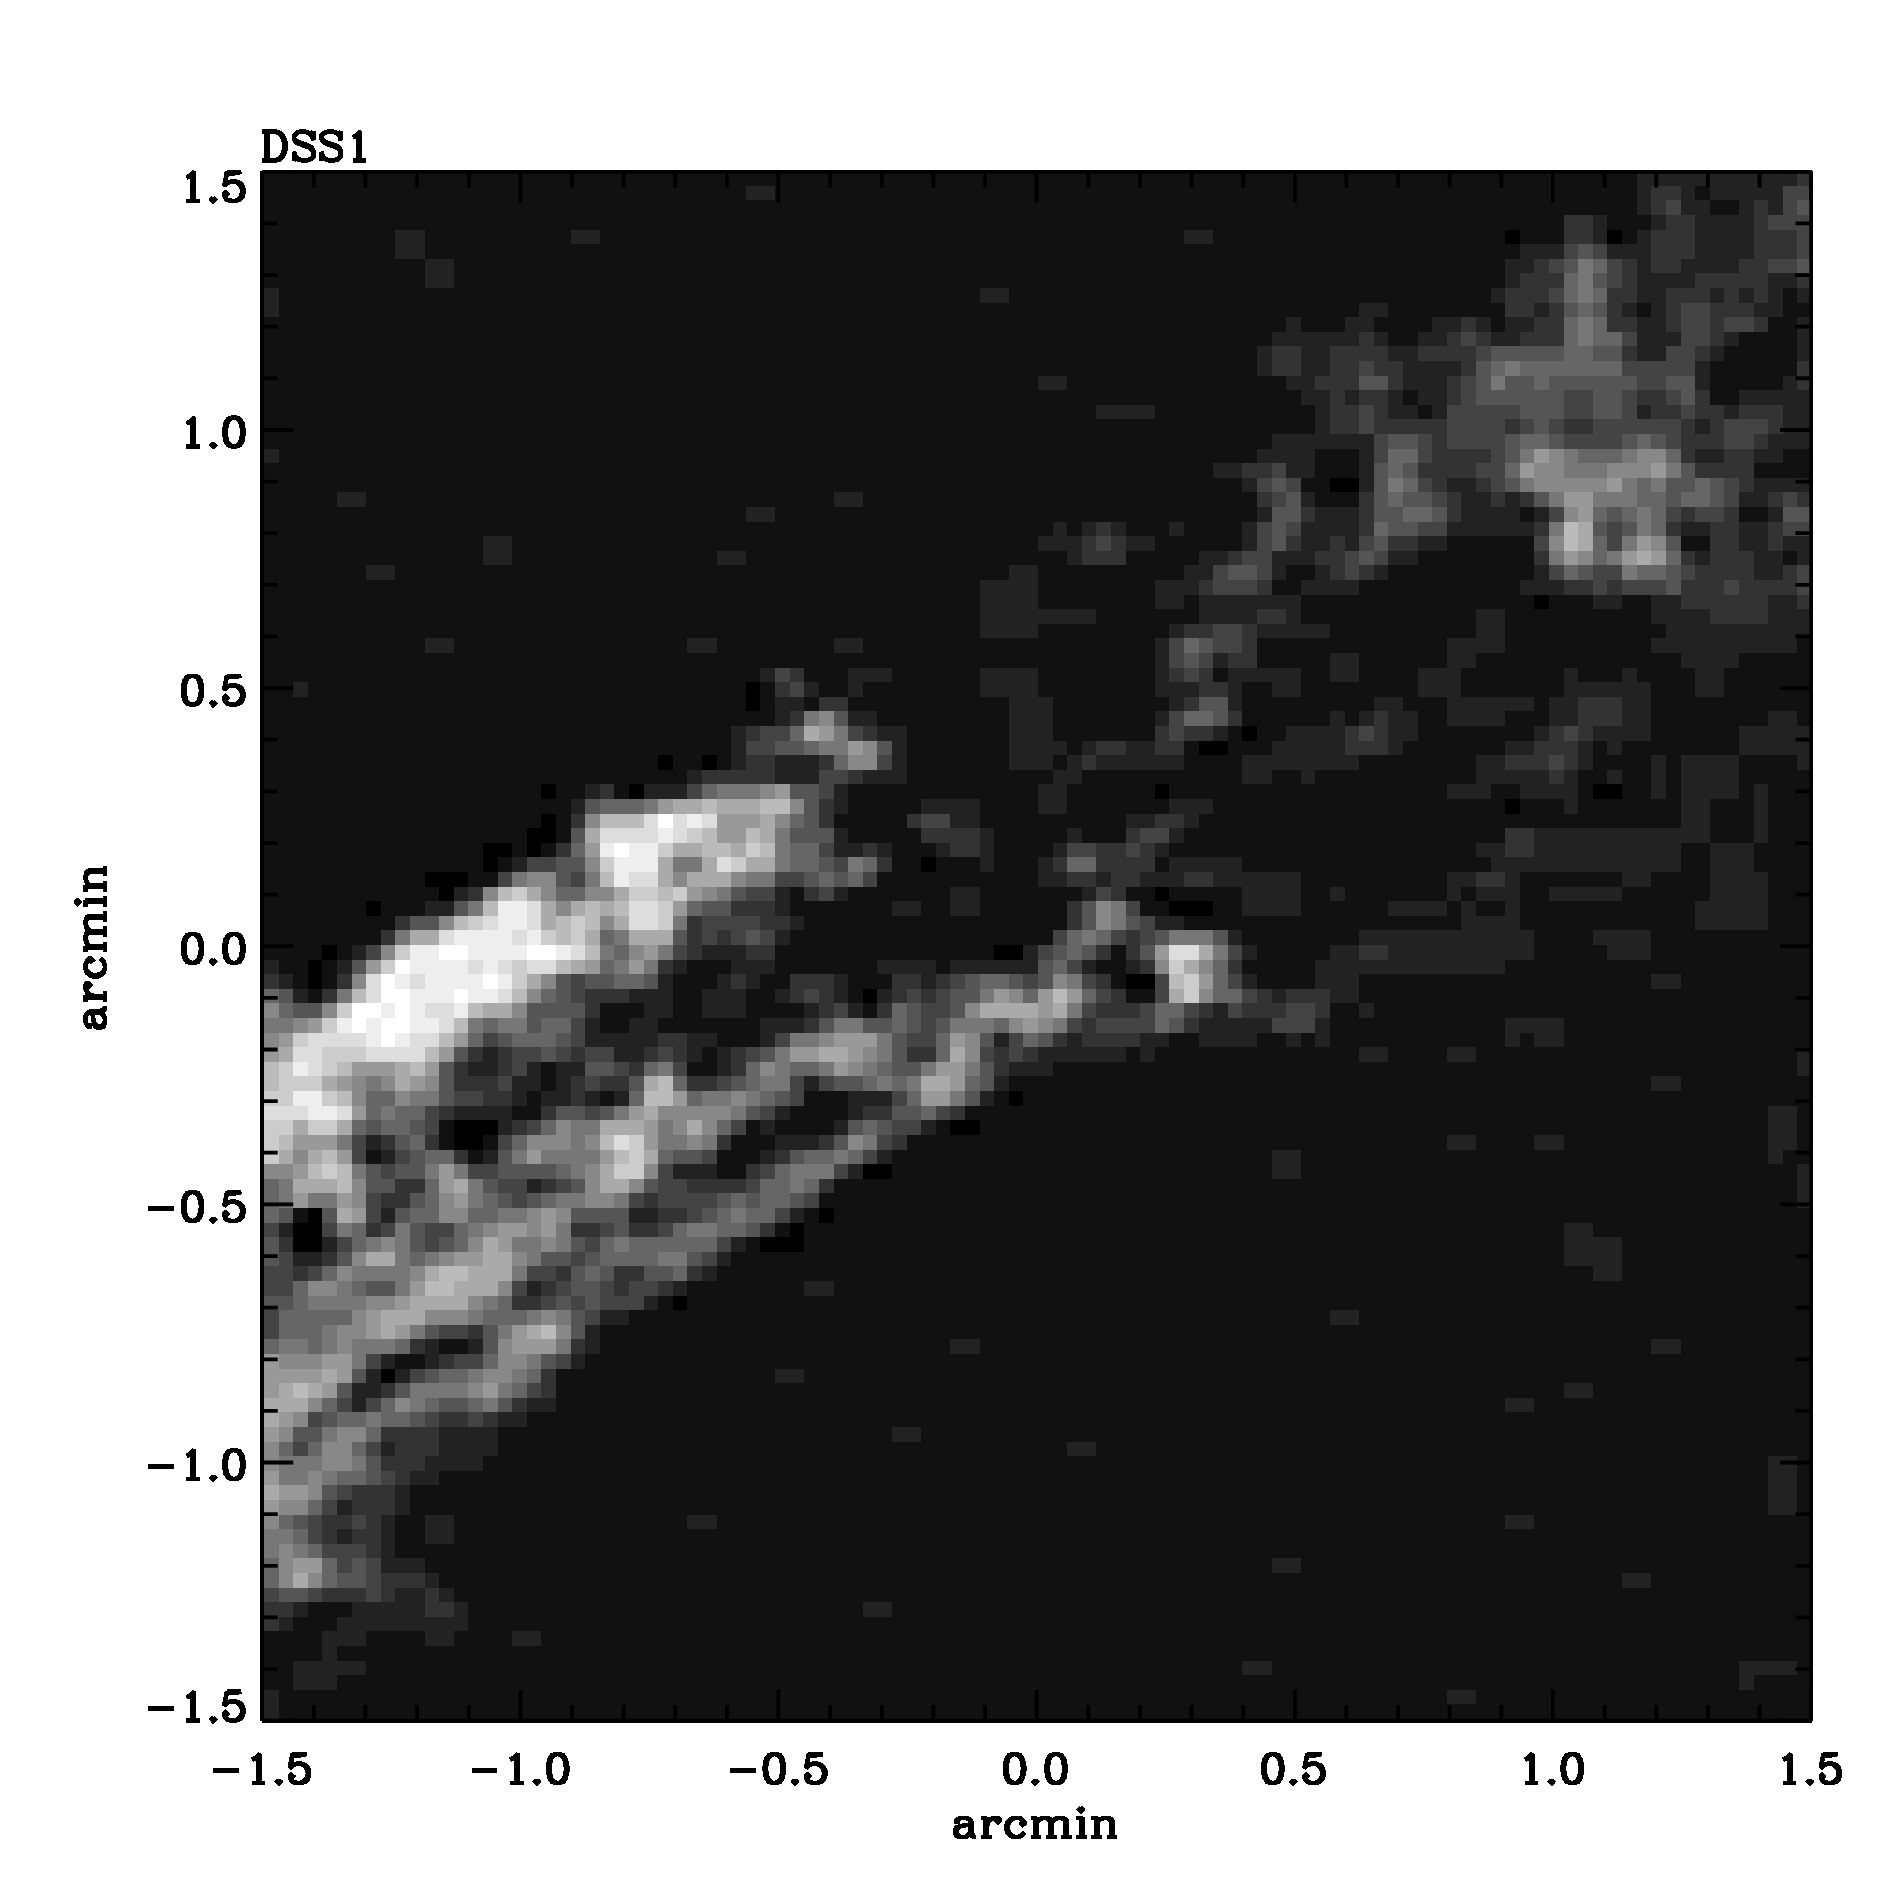 Optical image for SWIFT J1325.4-4301